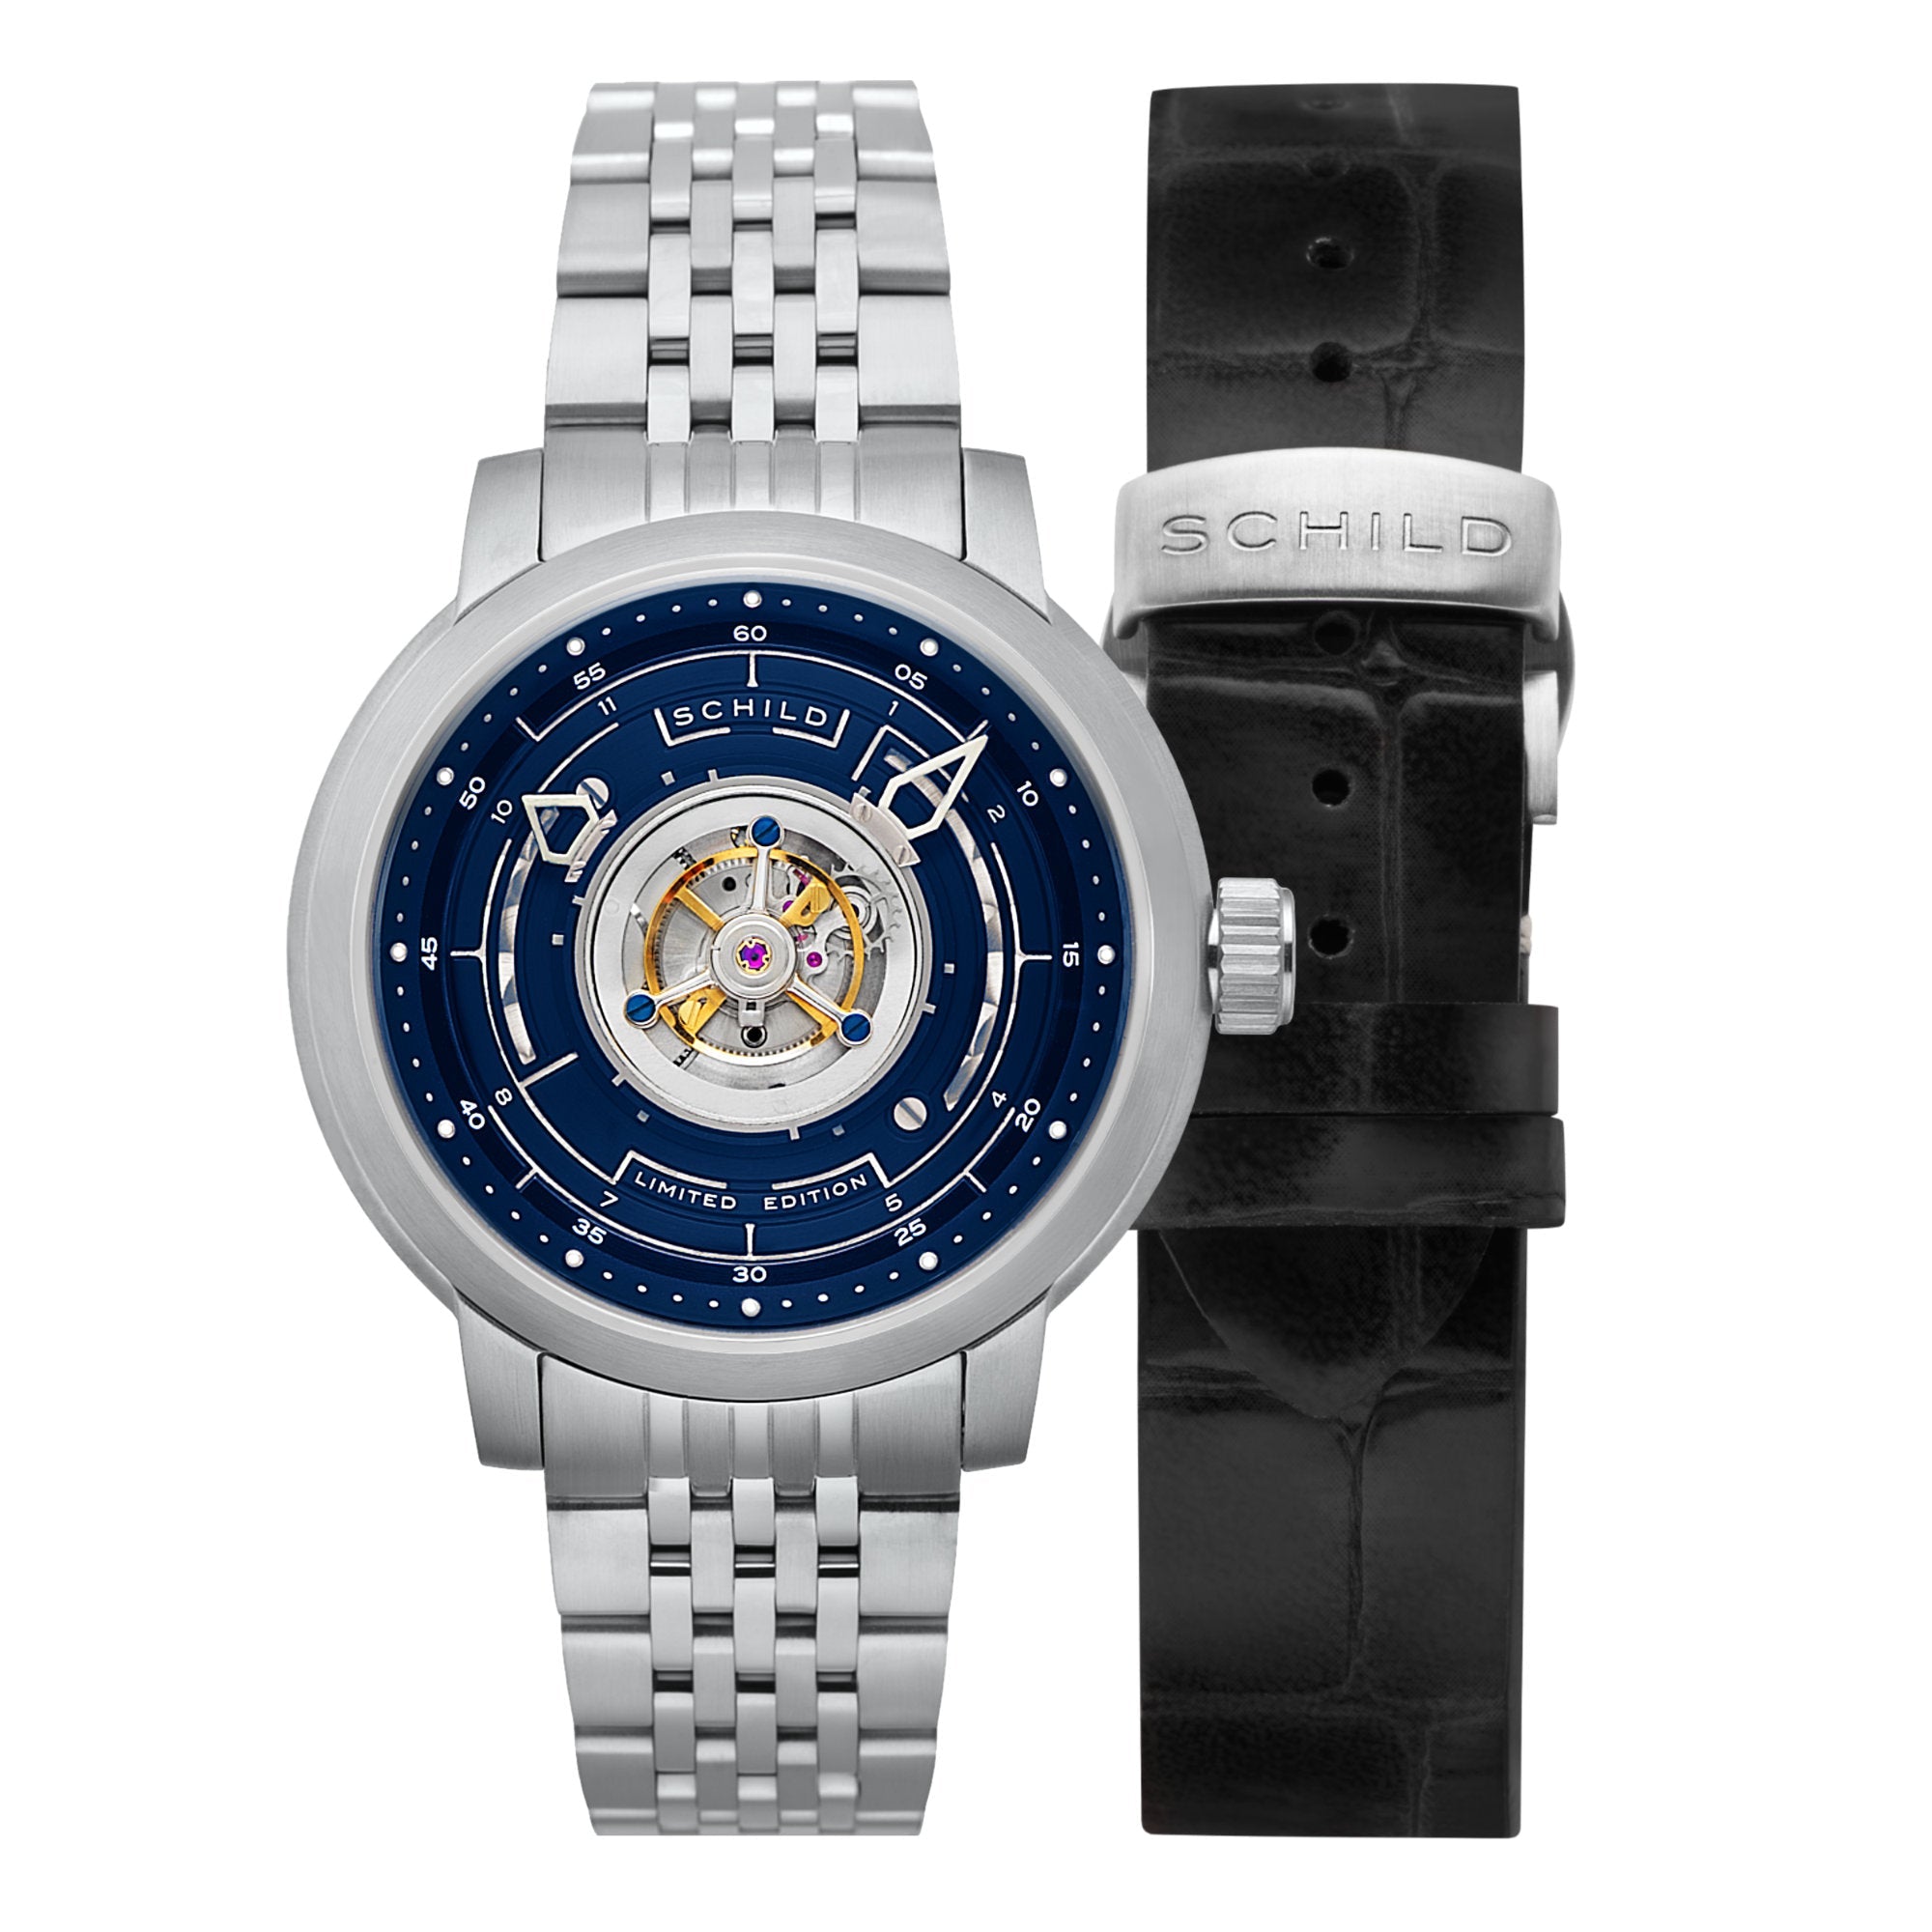 Schild Schild Tourbillon Pennant Blue Men's Limited Edition Watch SC-1011-22